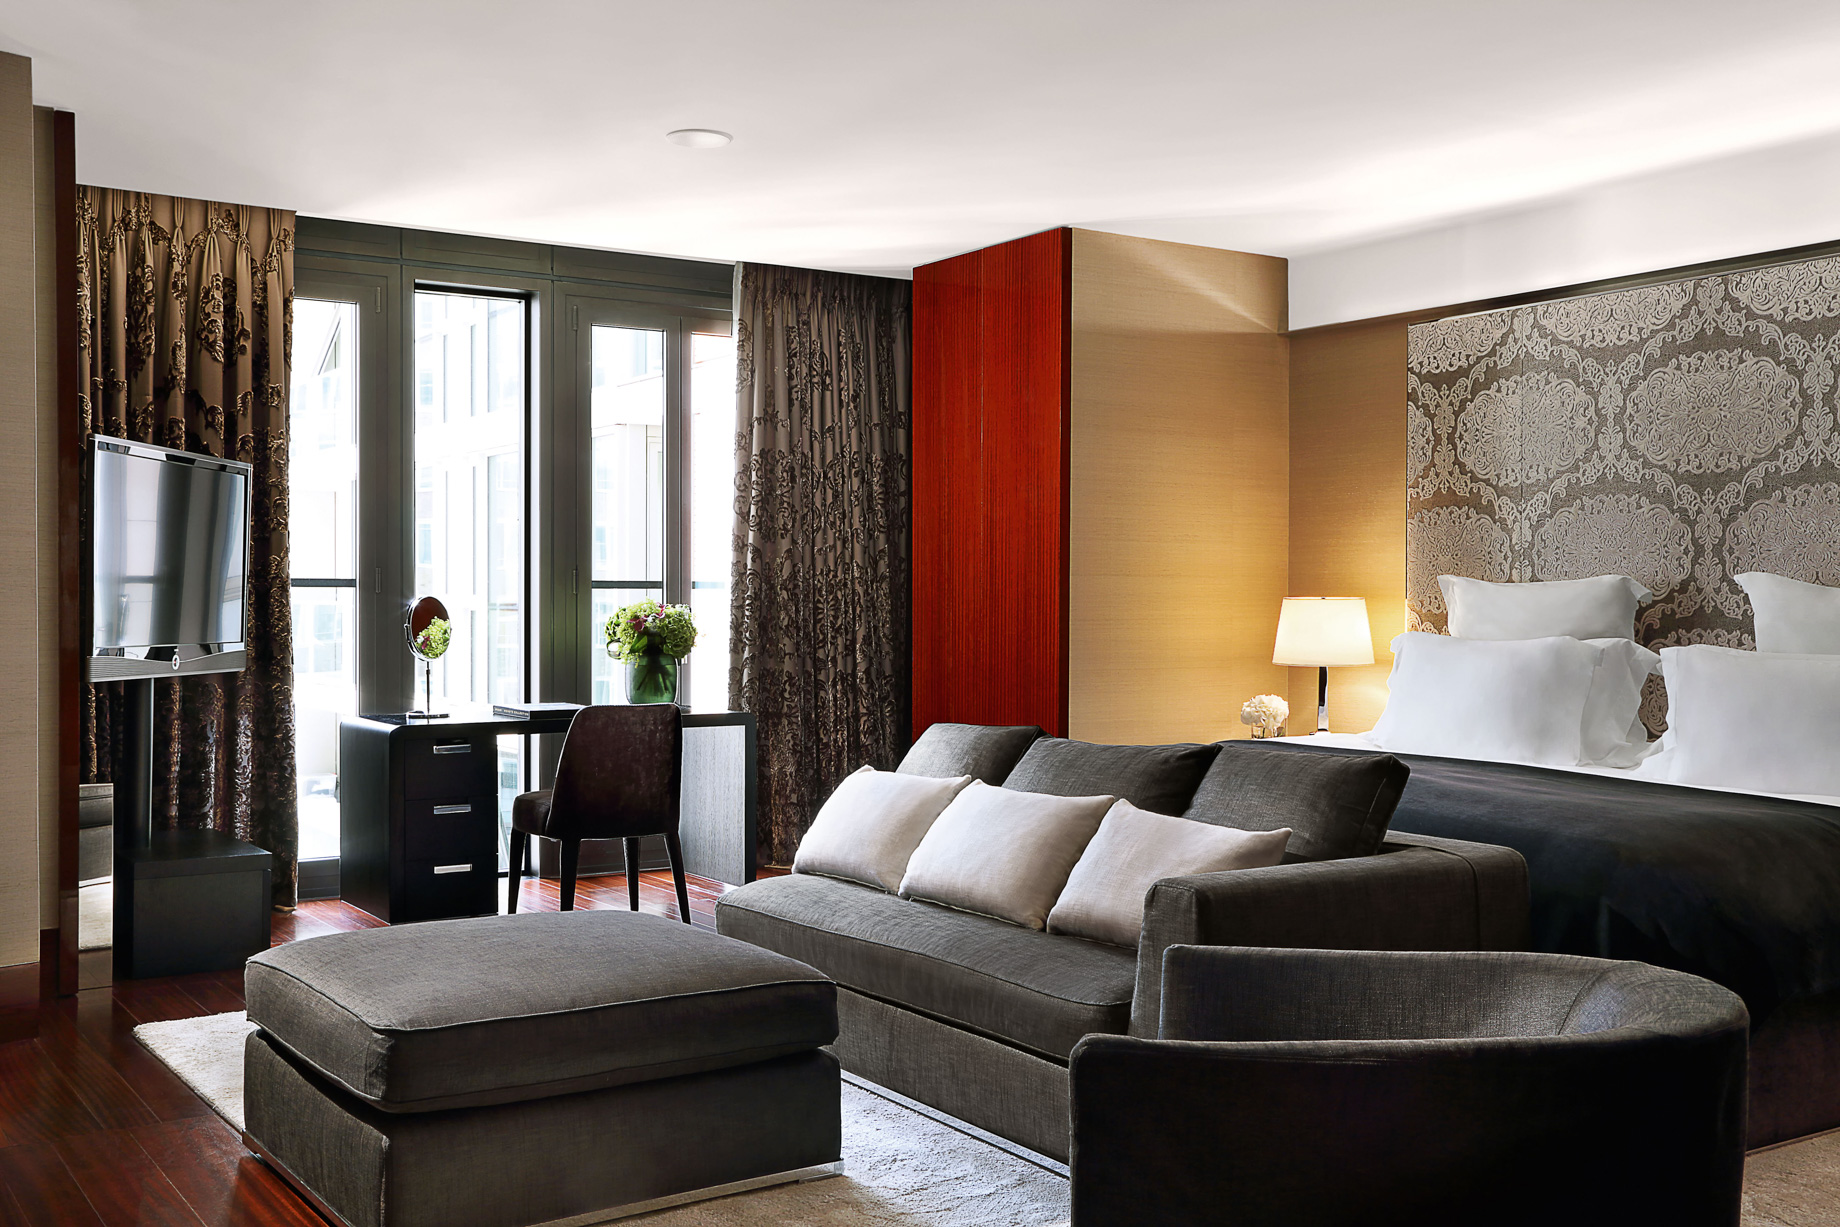 Bvlgari Hotel London – Knightsbridge, London, UK – Bvlgari Suite Bedroom